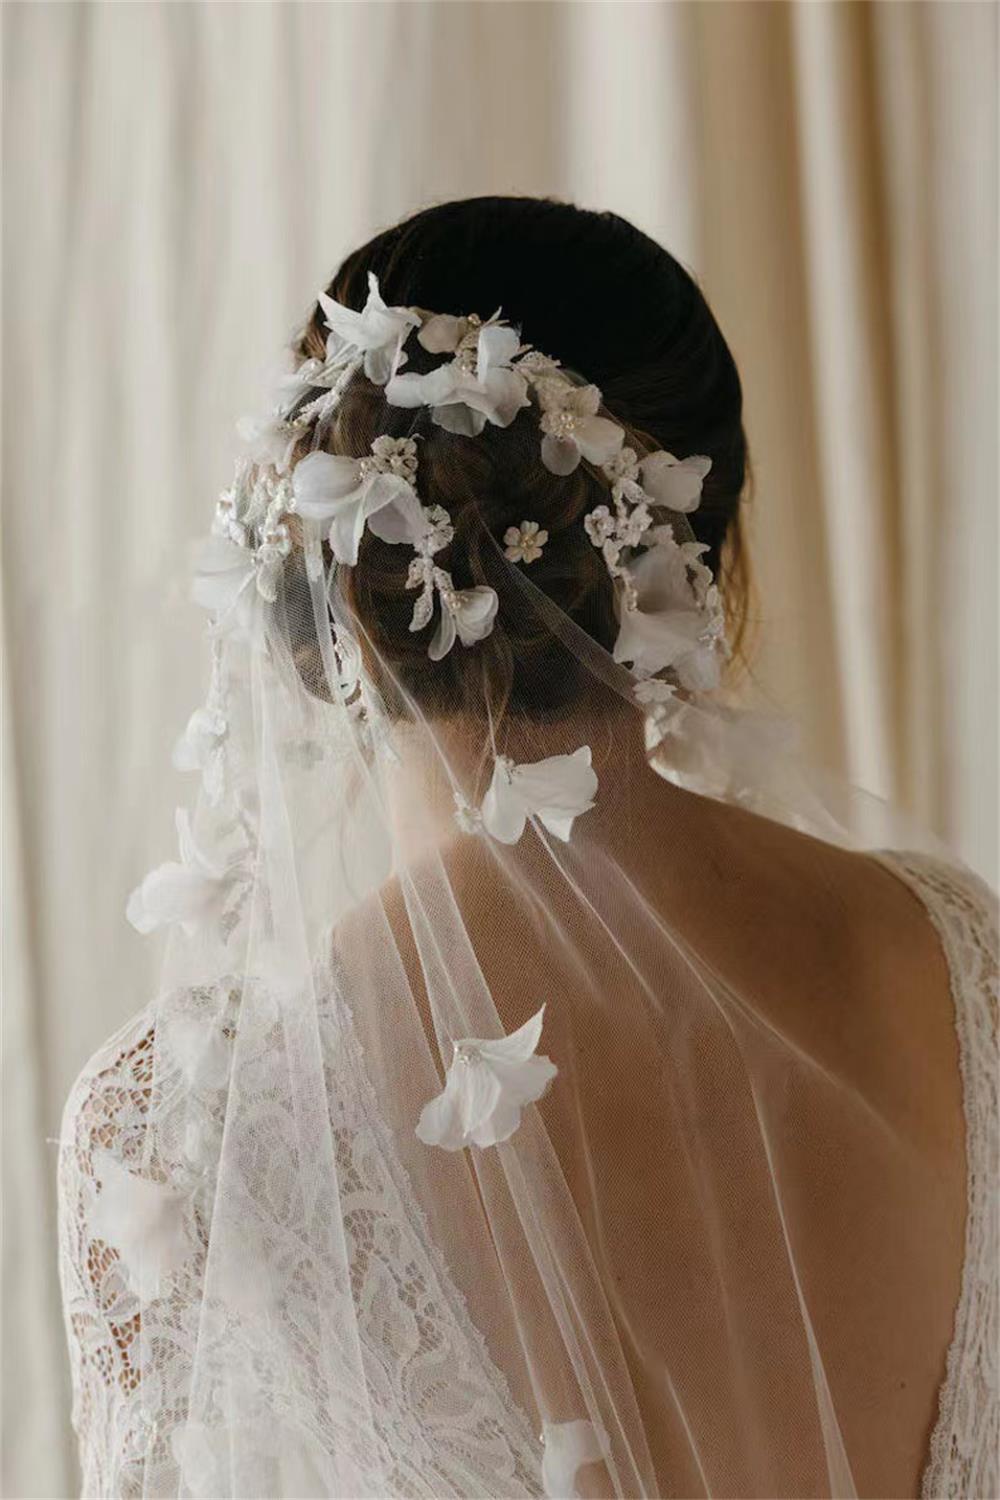 Super Wide 3m Long Tail Veil Smart Flower Trend Bridal Wedding Accessories ZD52